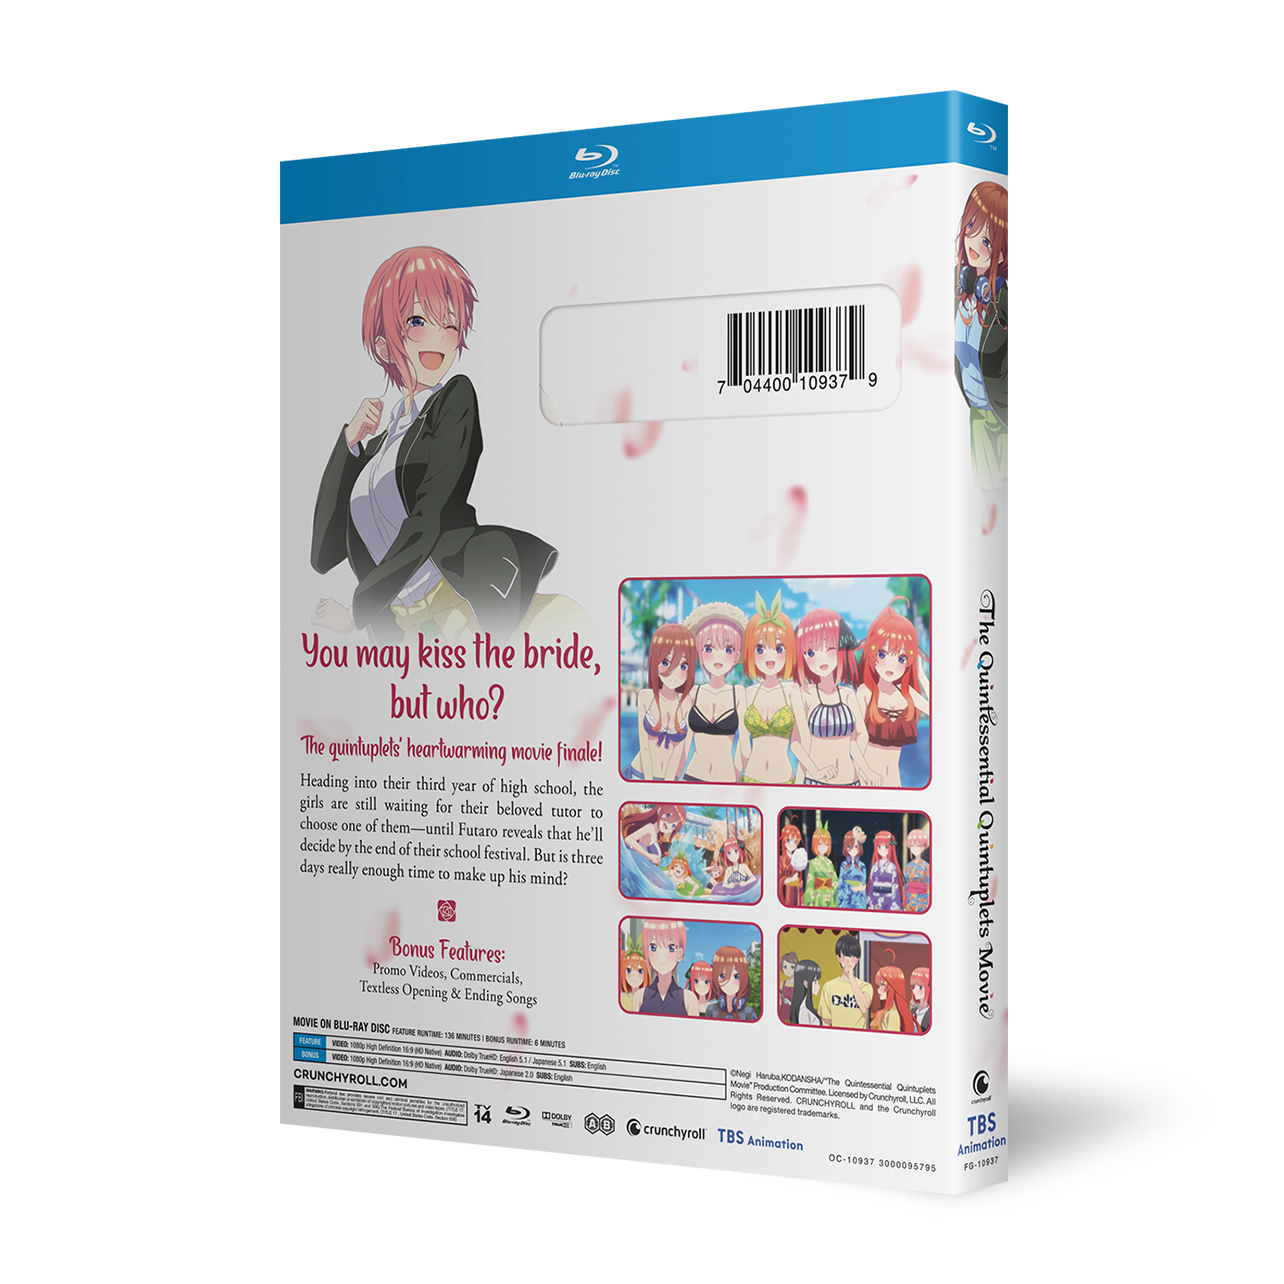 The Quintessential Quintuplets Movie Limited Editon Blu-ray Manga